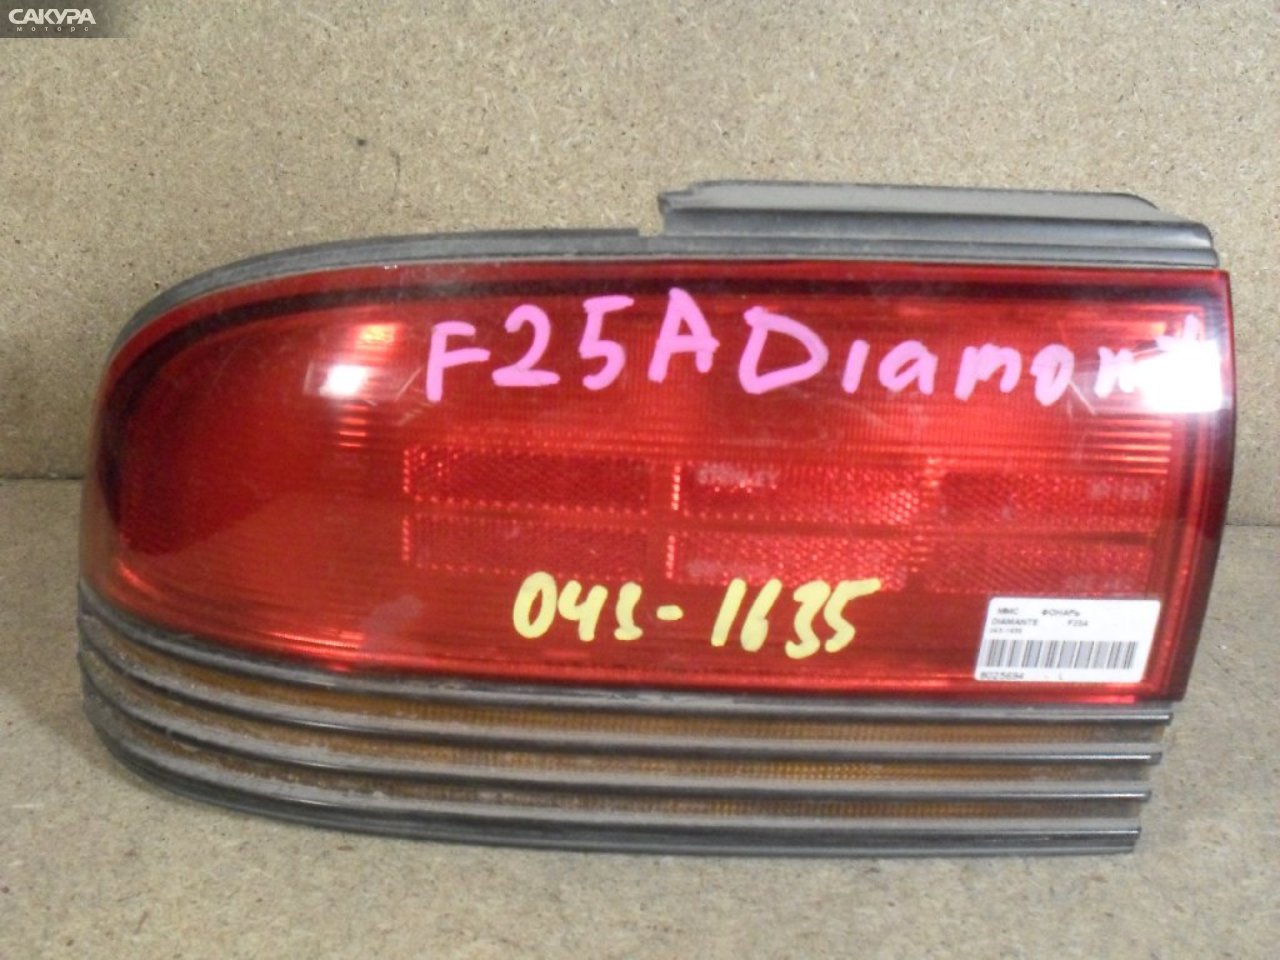 Фонарь стоп-сигнала левый Mitsubishi Diamante F25A 043-1635: купить в Сакура Абакан.